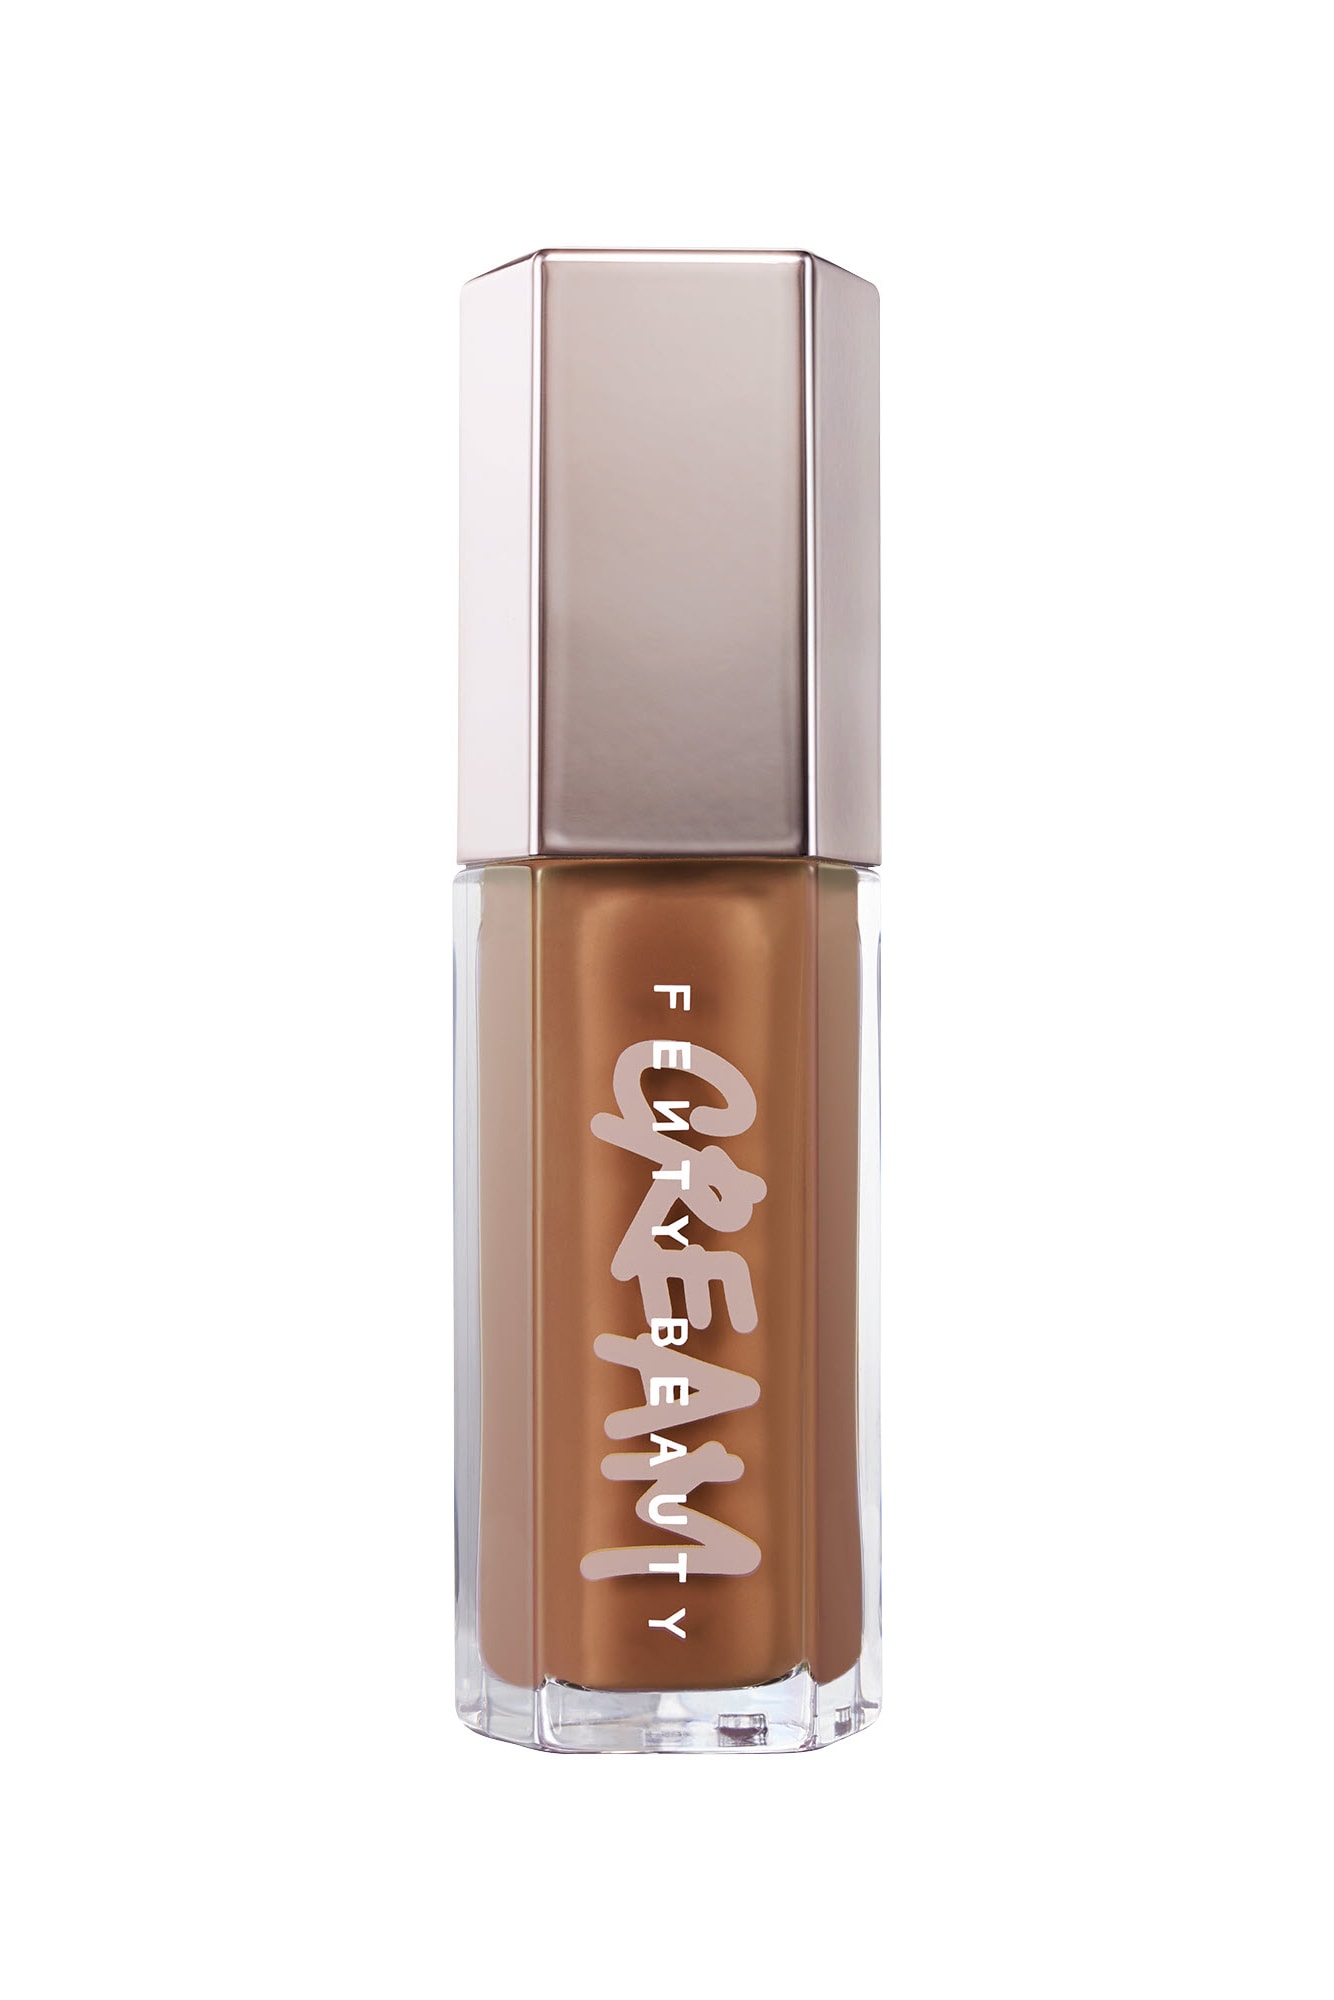 Fenty Beauty Releases Gloss Bomb Cream Color Drip Lip Cream Colors Lipstick Product Rihanna